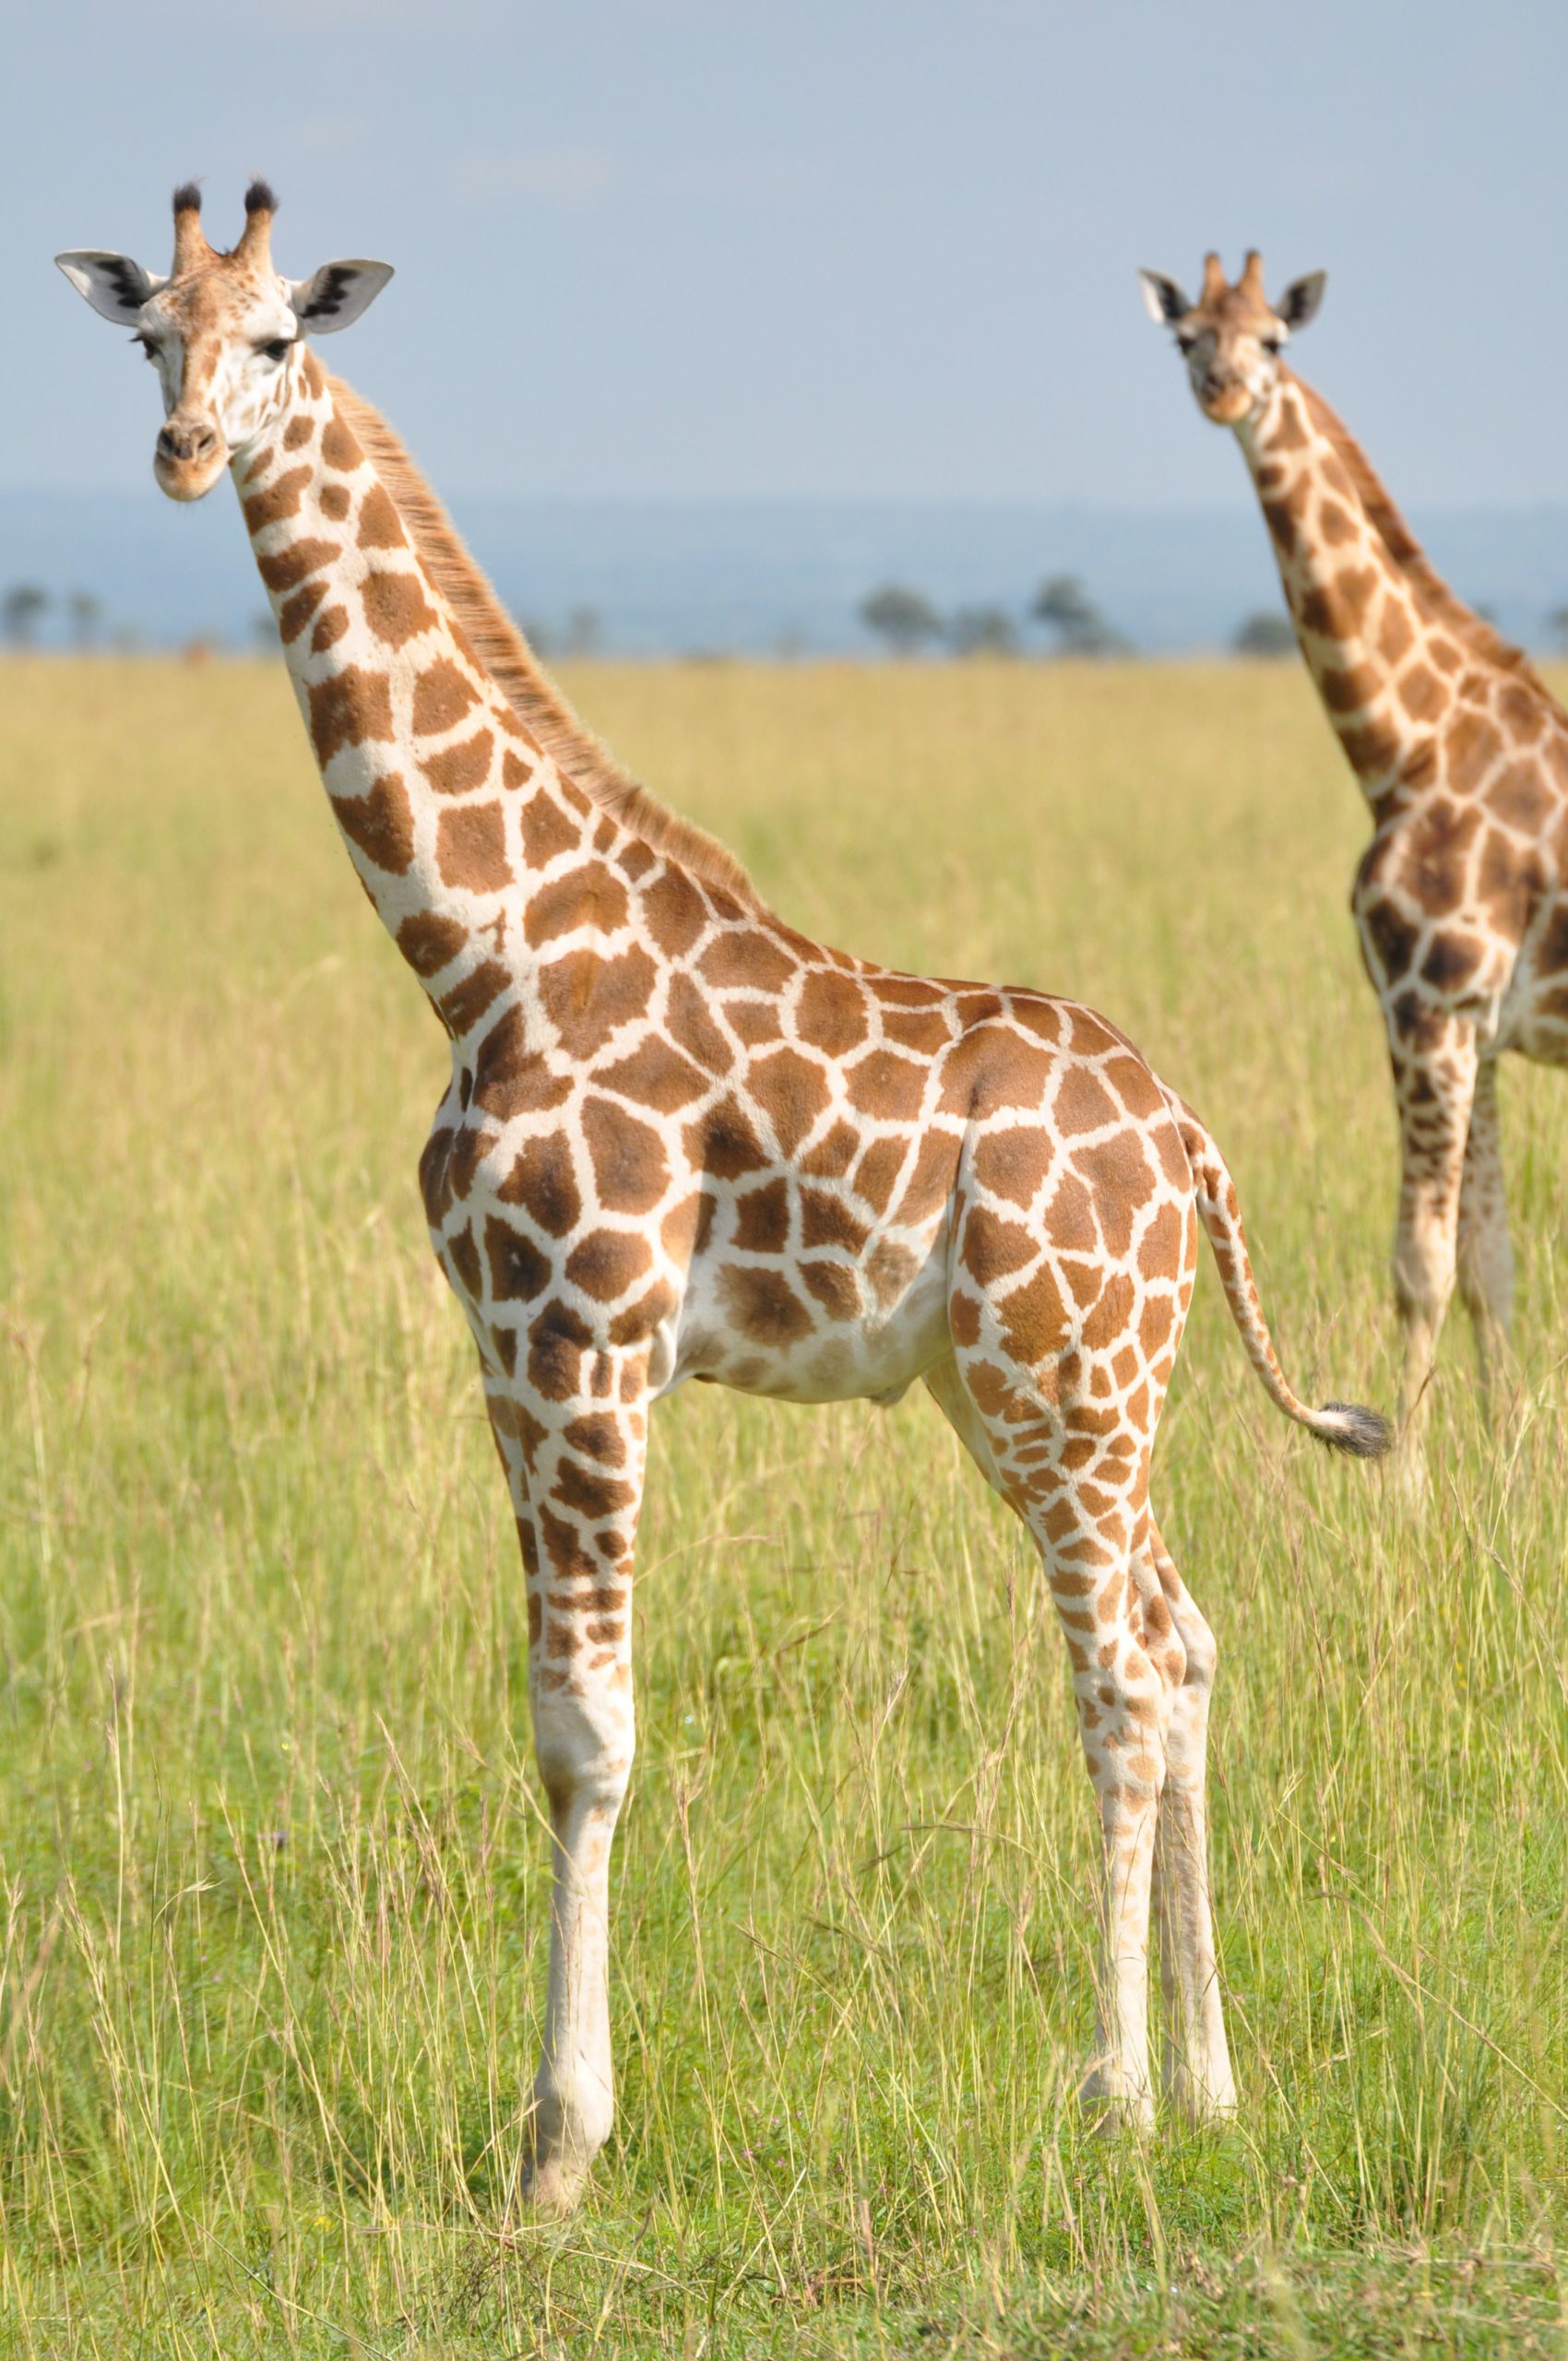 Nubian-giraffe-Murchison-Falls-NP-Uganda2-c-Fennessy-GCF-scaled